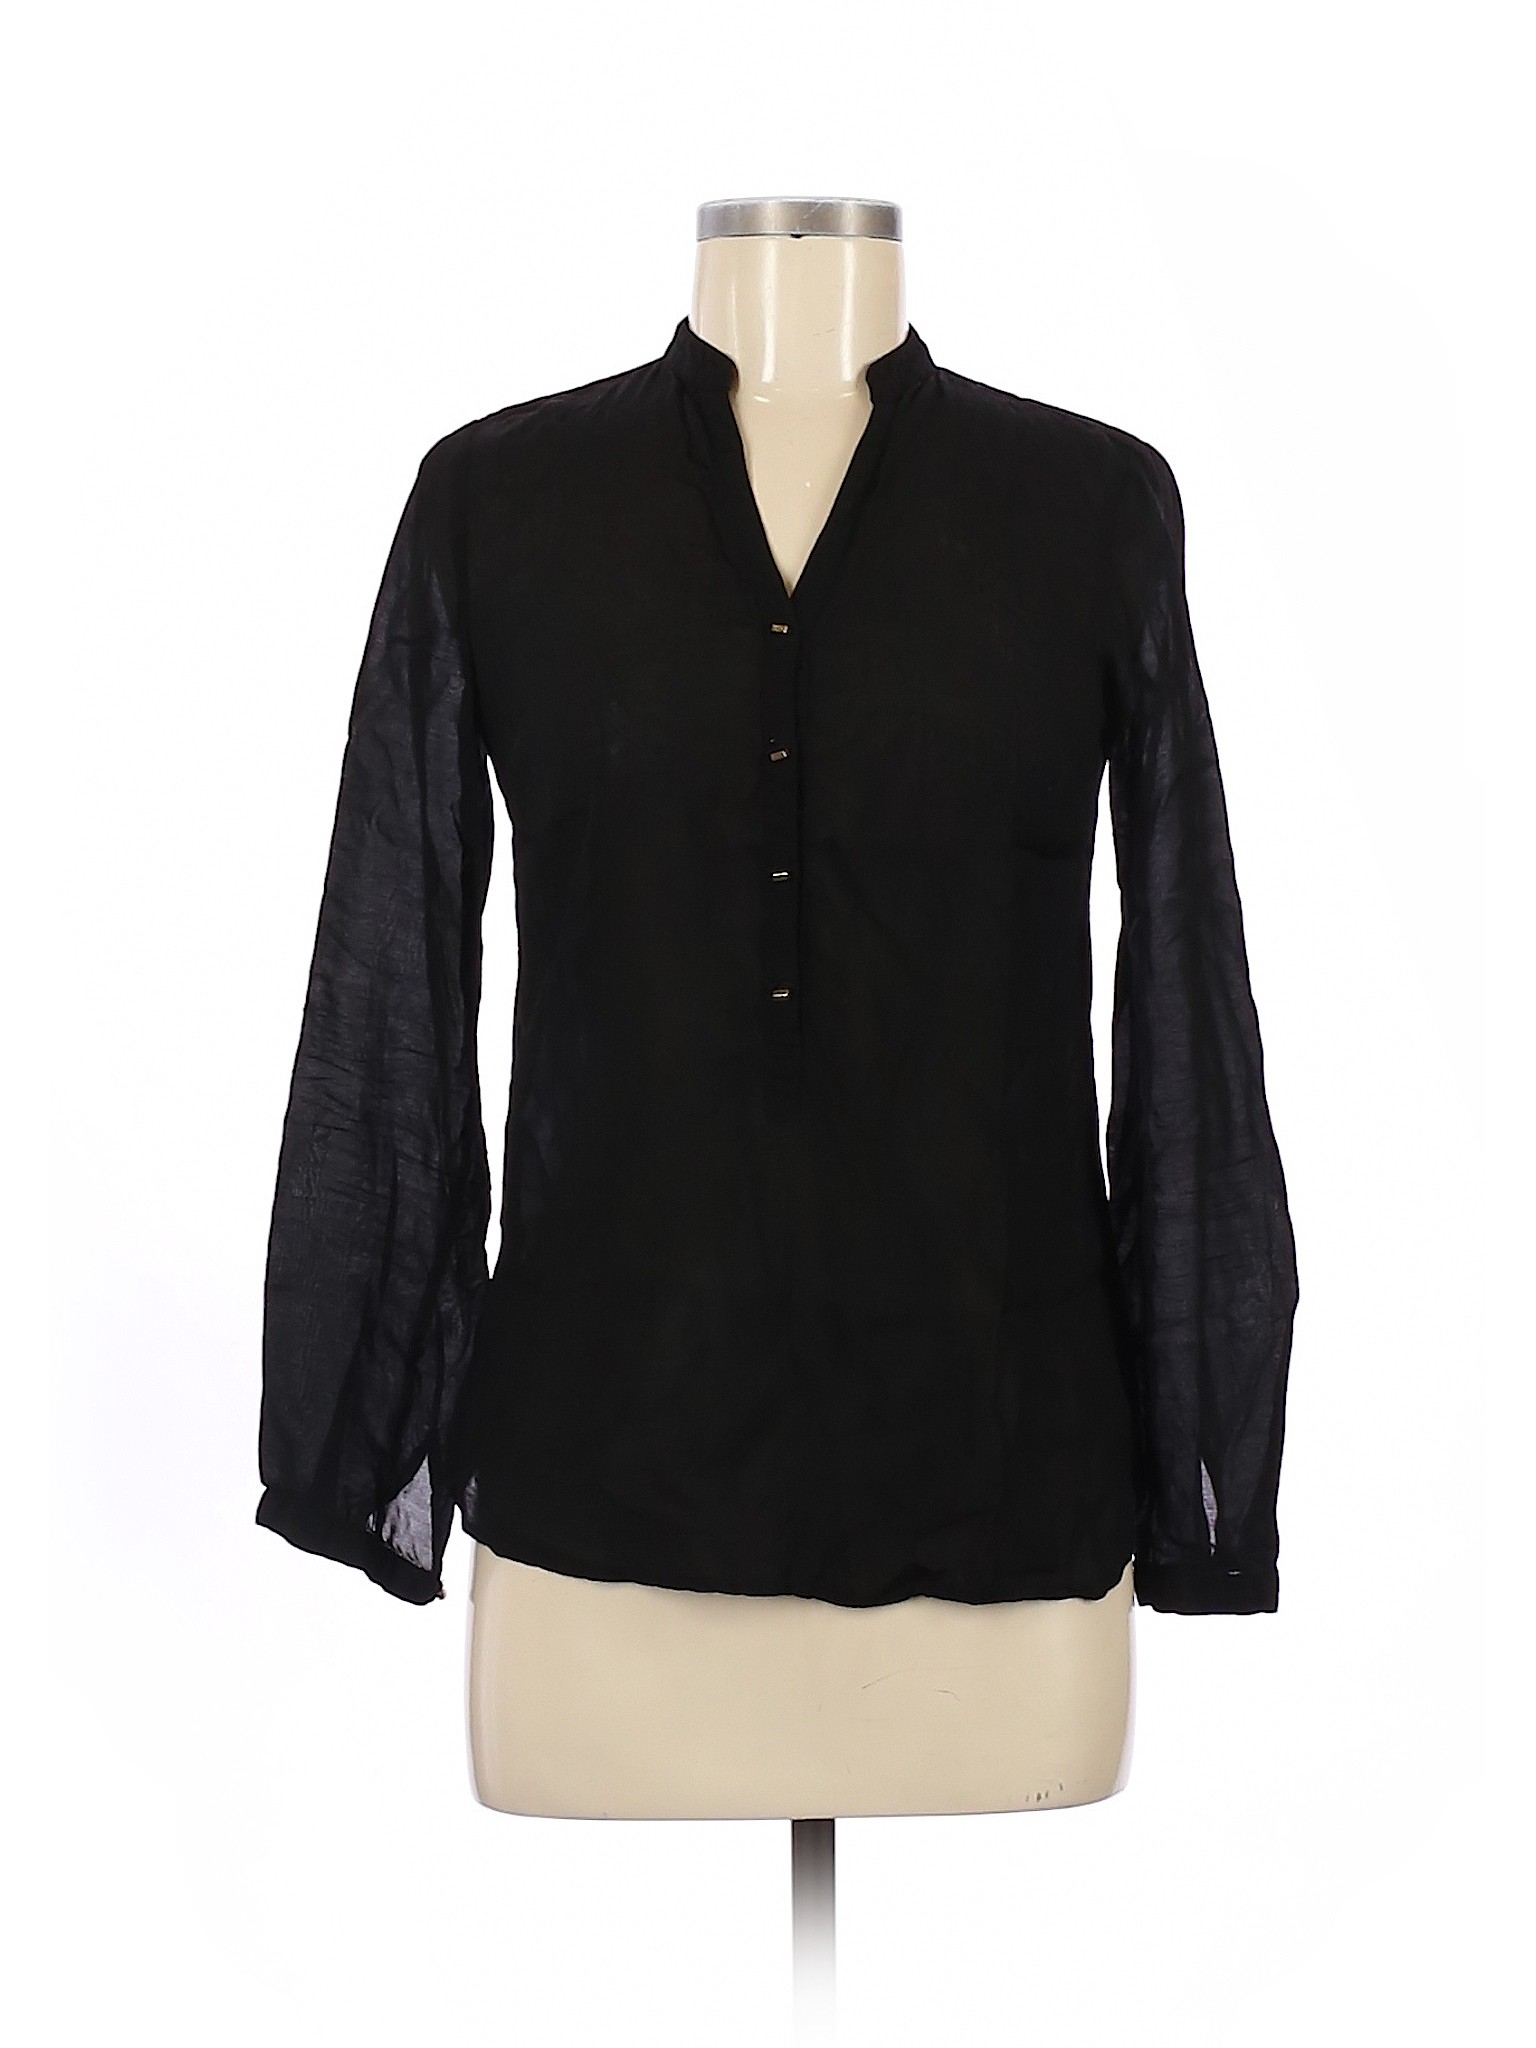 Smart Set Women Black Long Sleeve Blouse XS | eBay